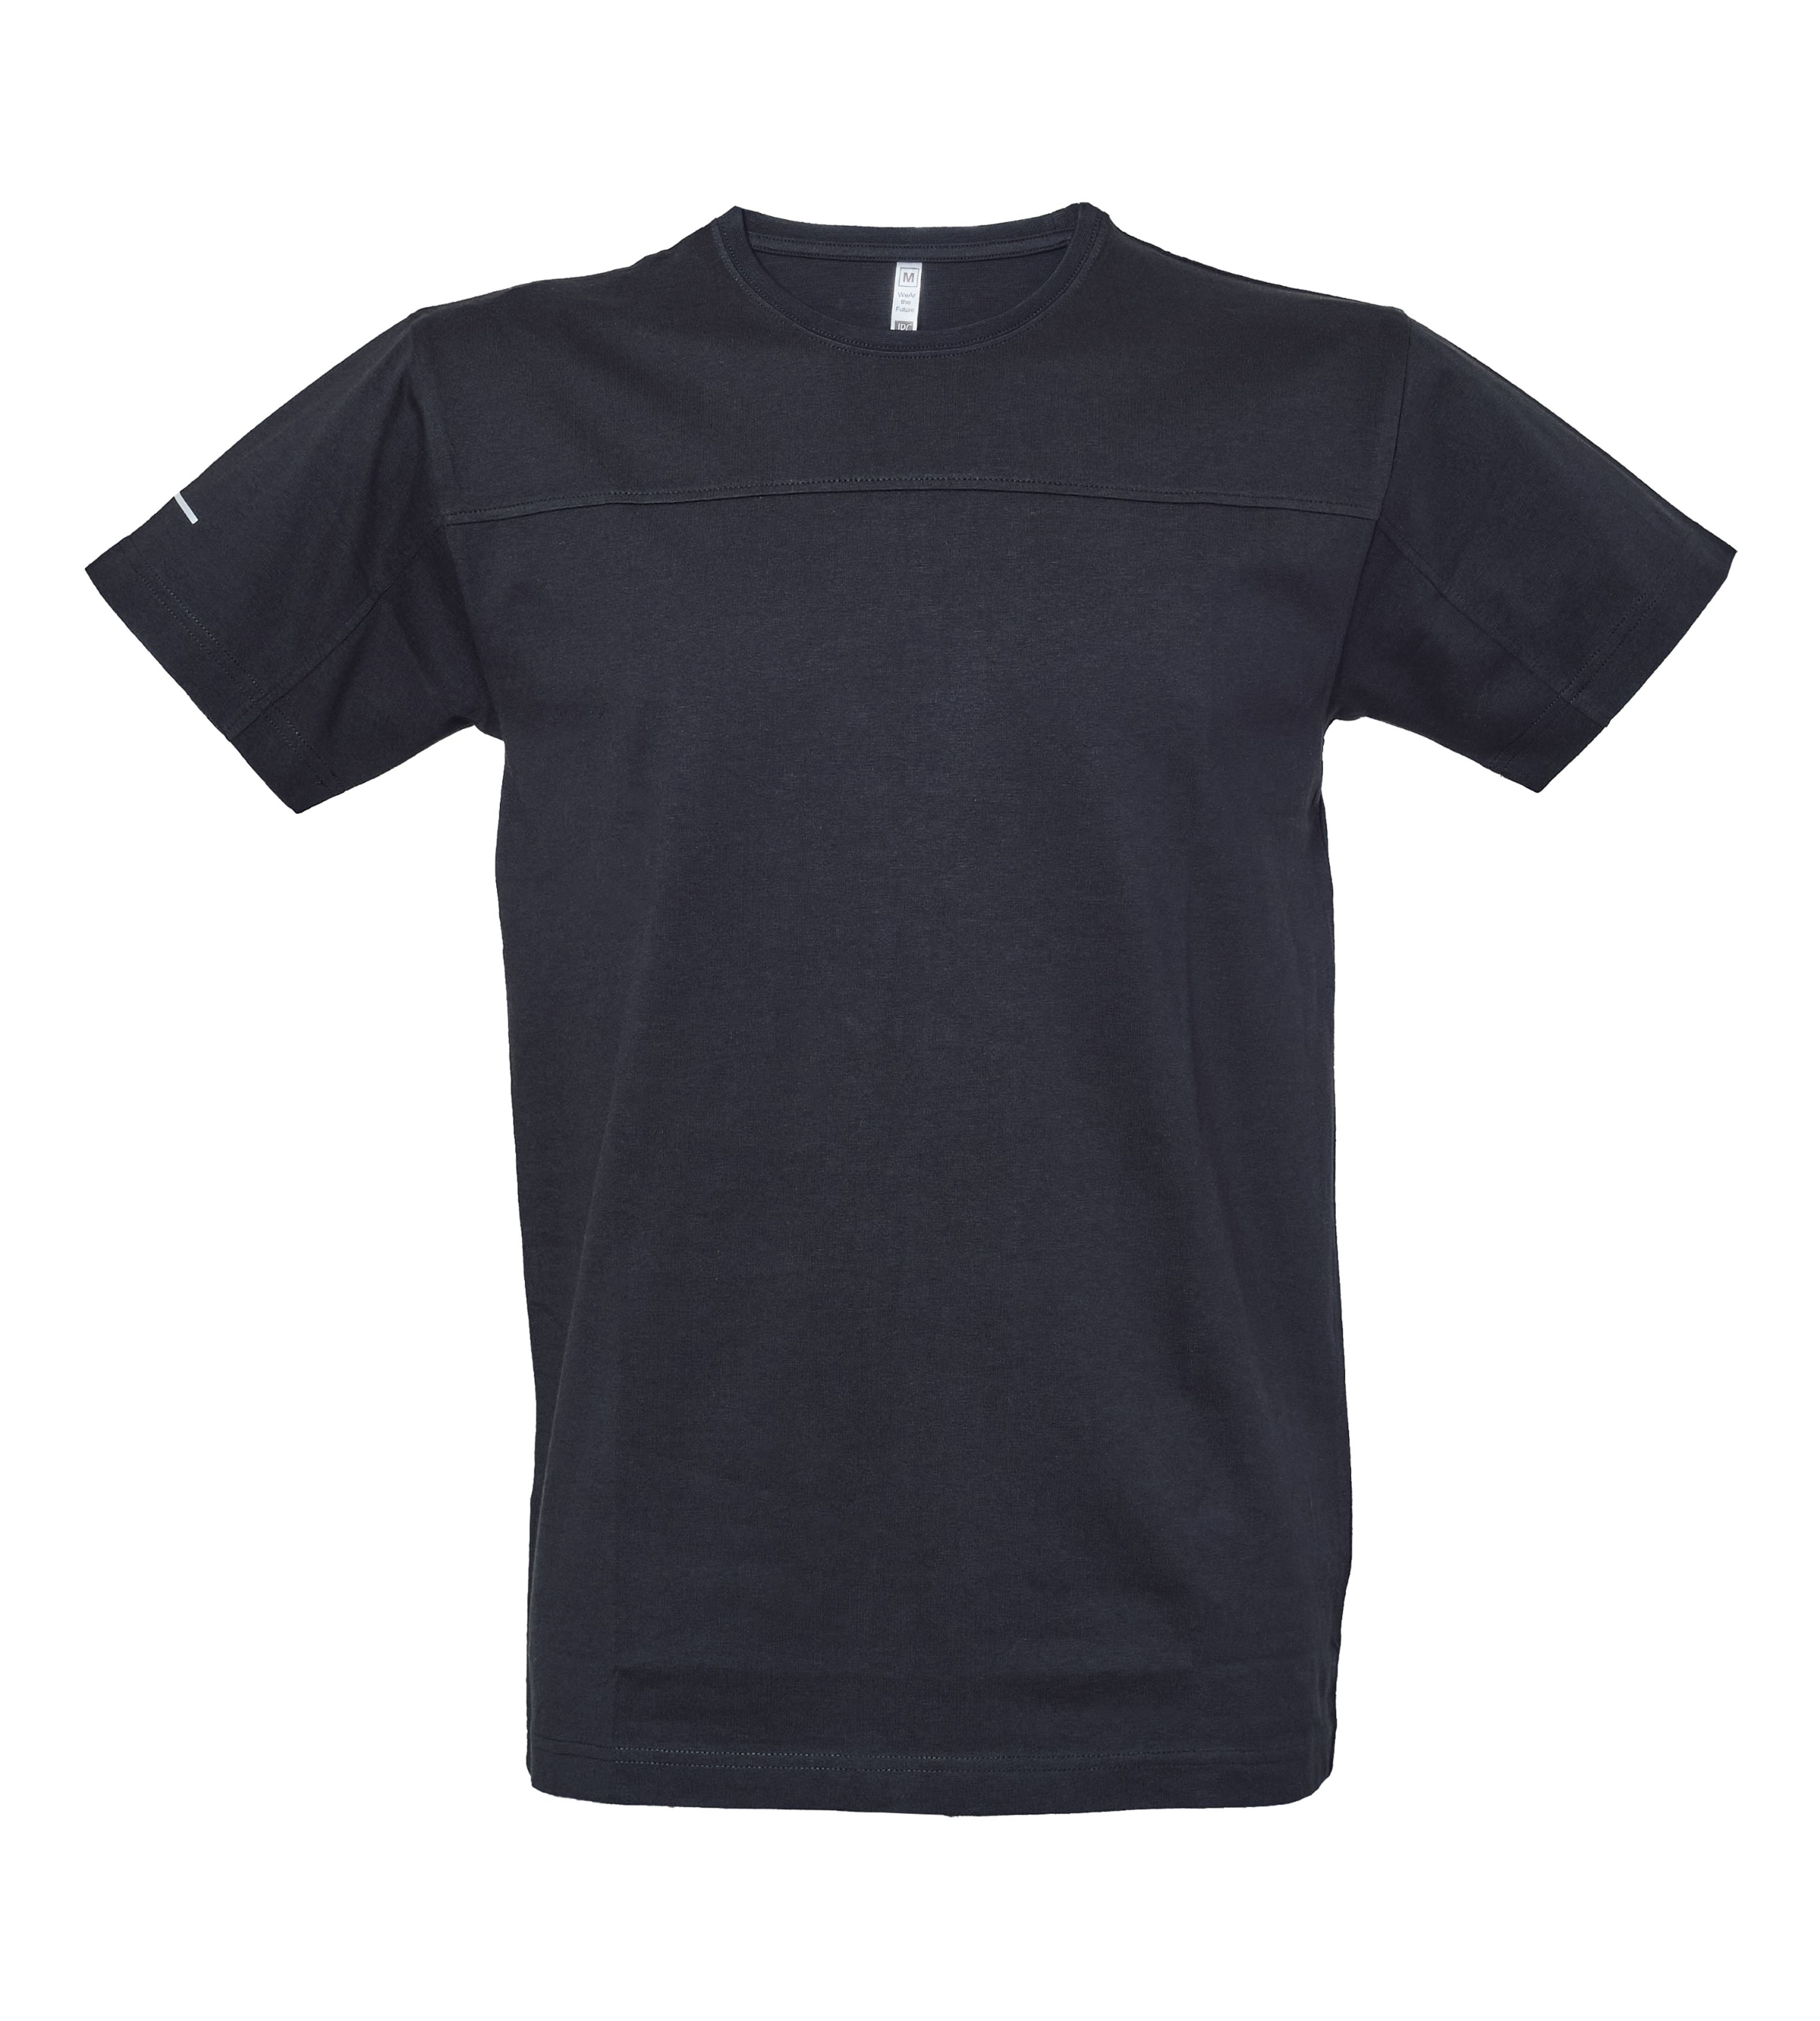 T-shirt Oviedo (variante colore: black)